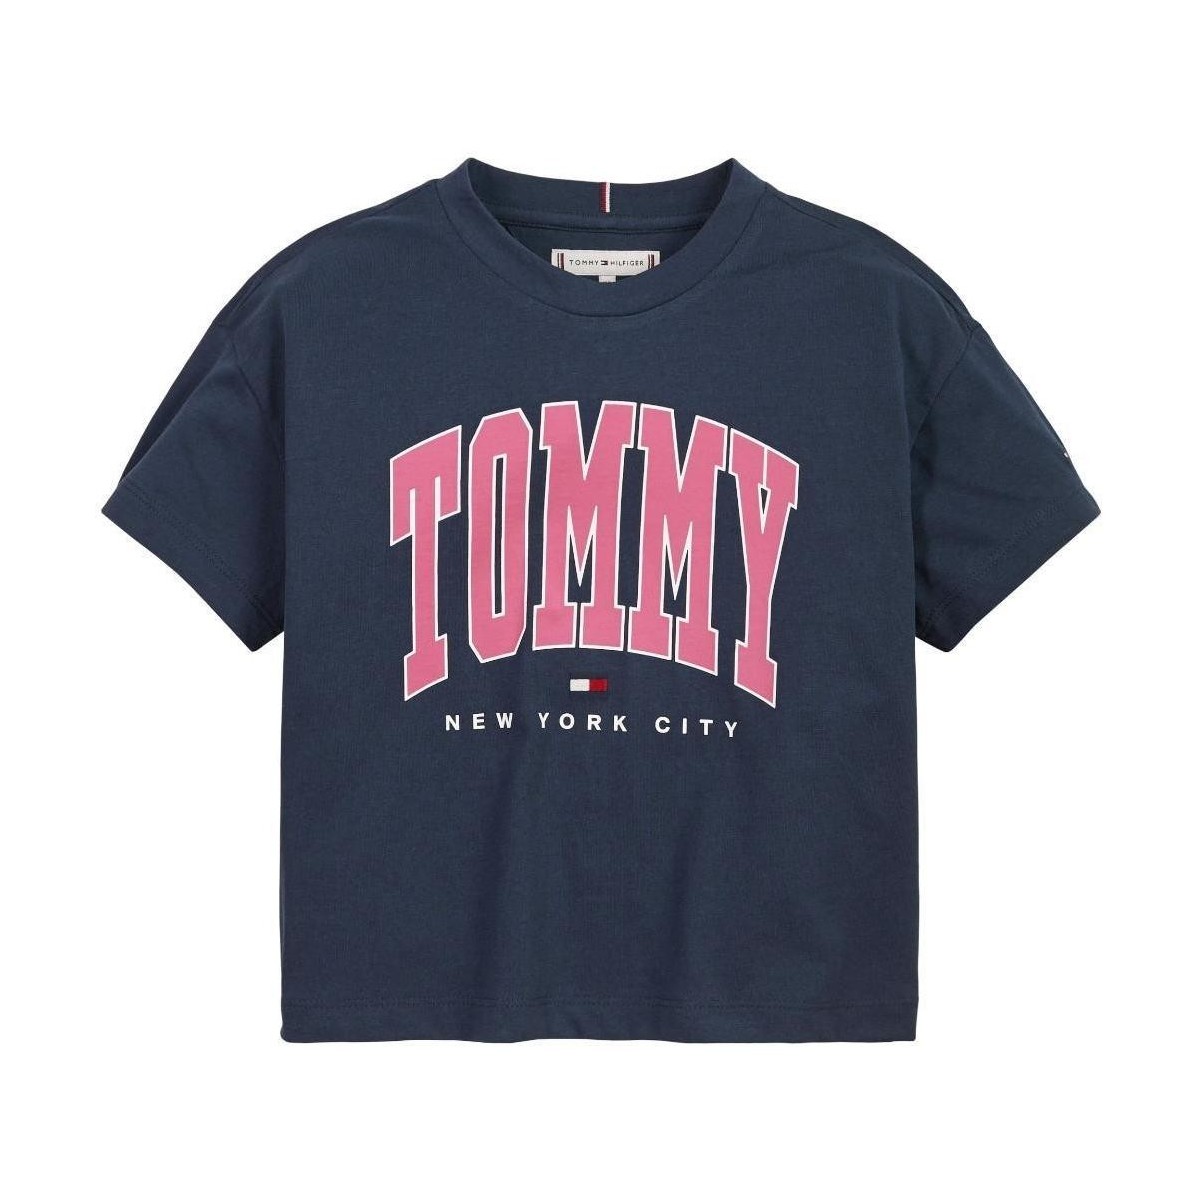 Textiel Meisjes T-shirts korte mouwen Tommy Hilfiger  Blauw